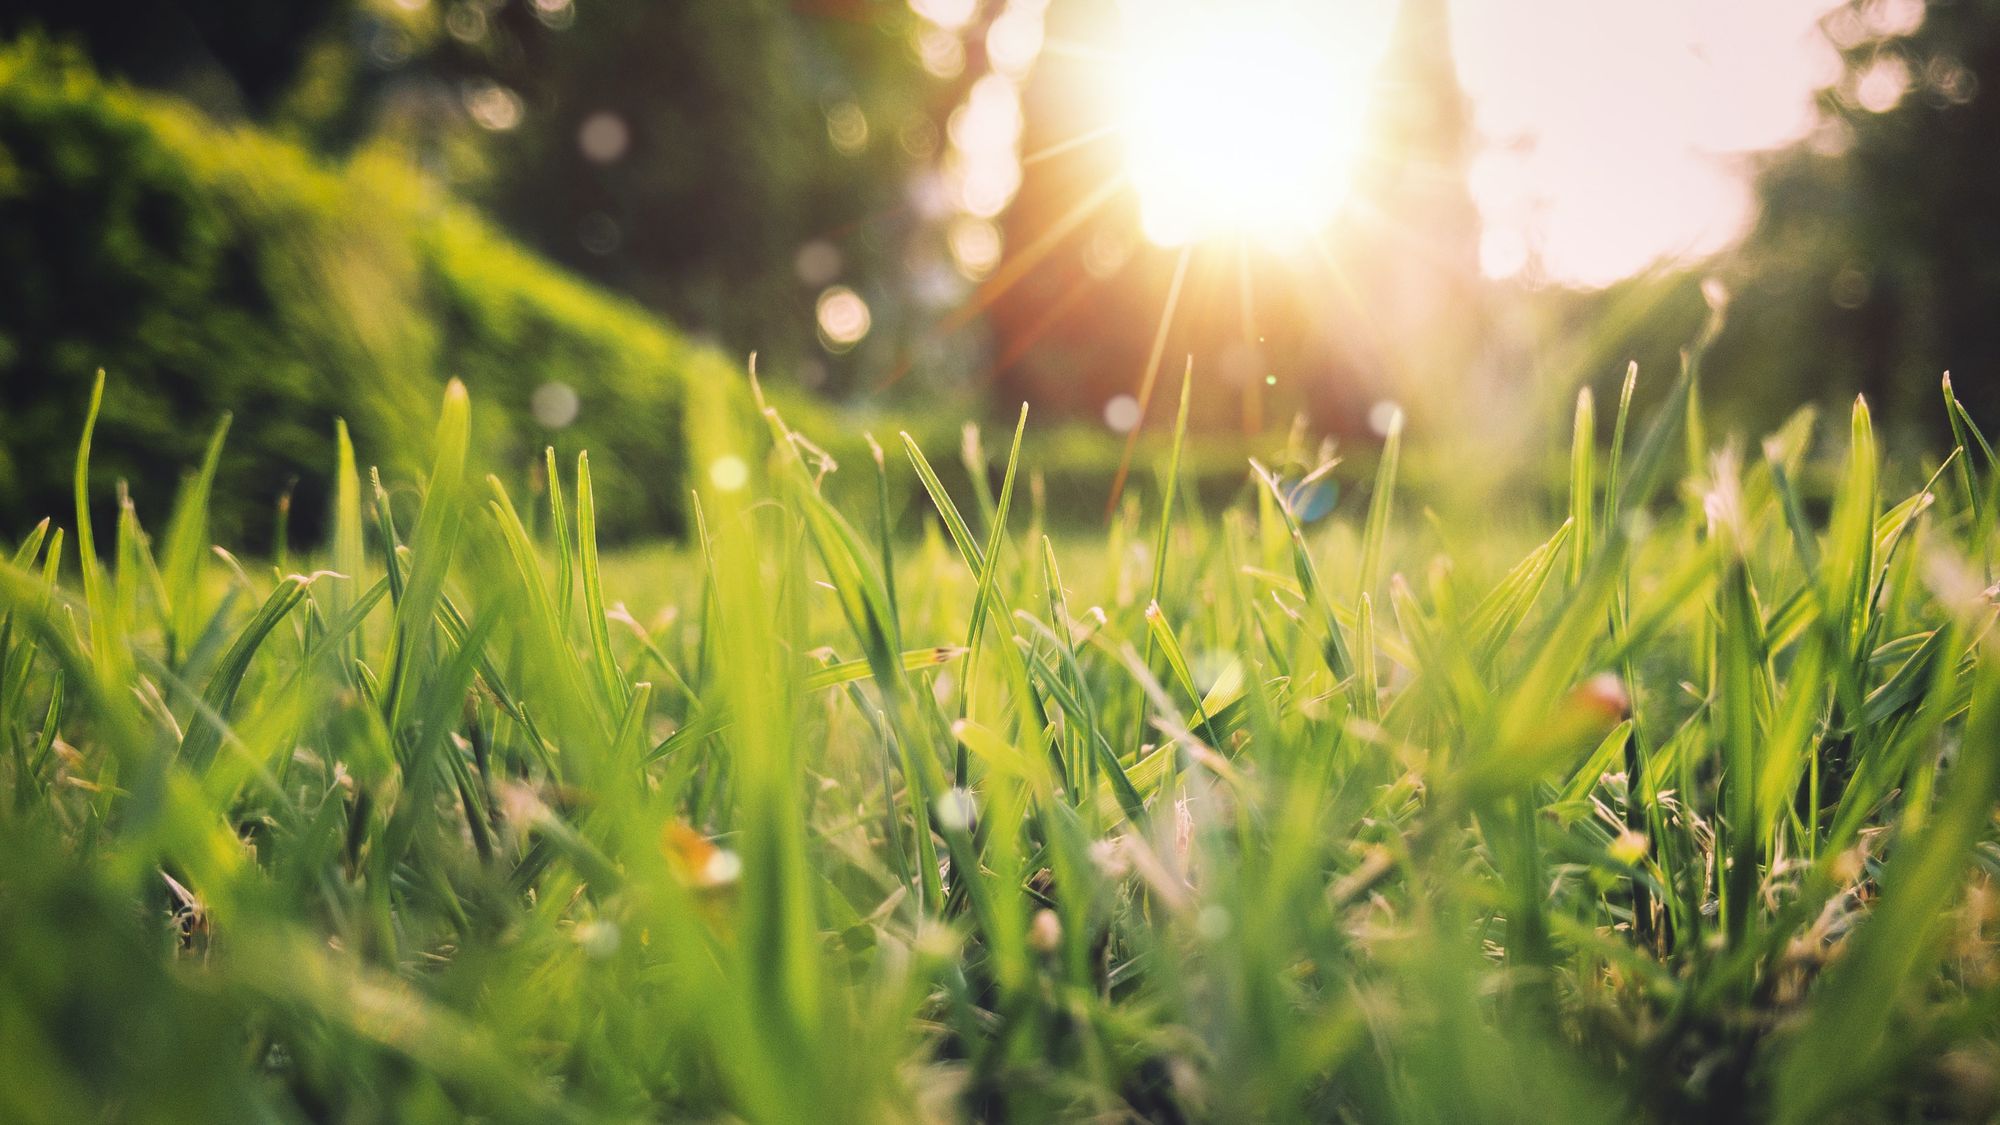 Sunlight shining through spring grass